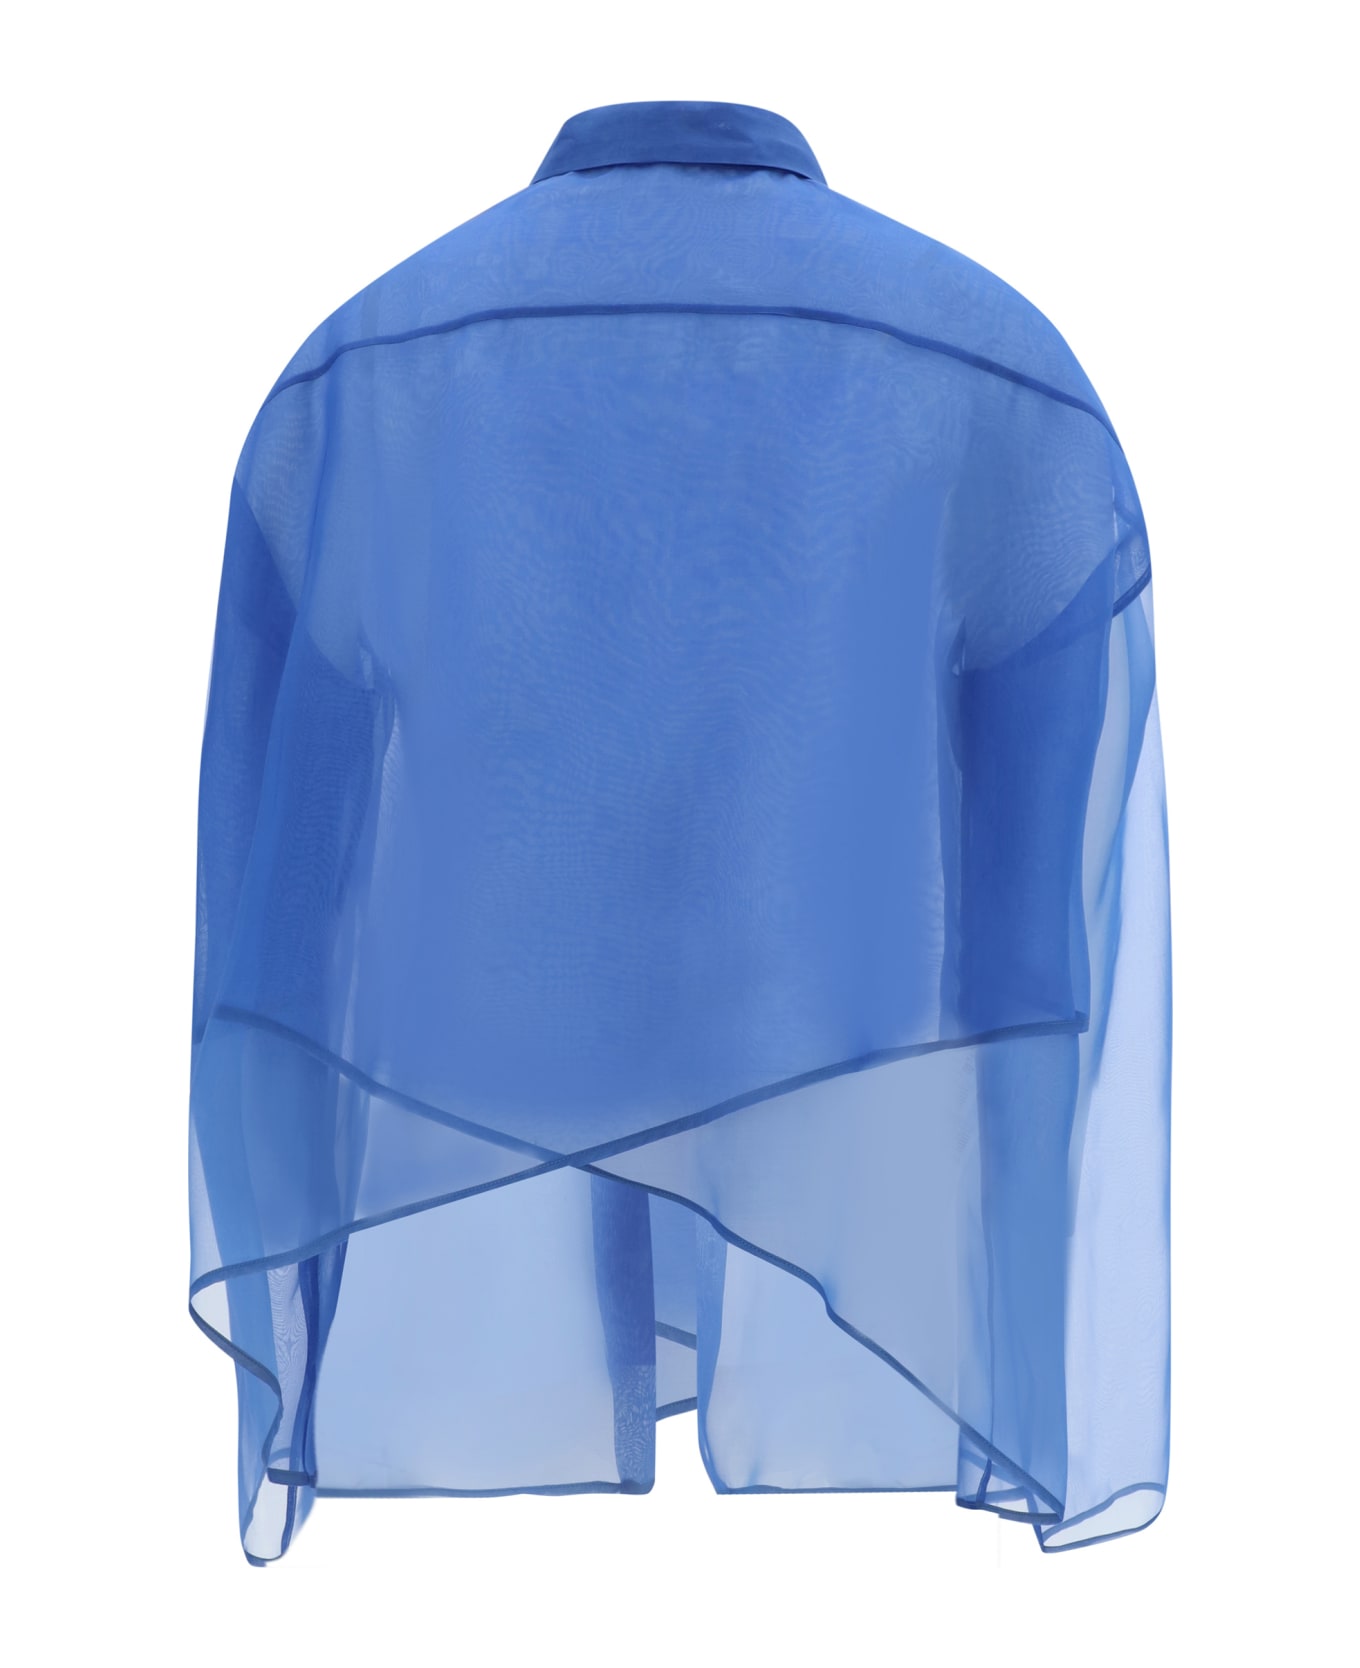 Giorgio Armani Shirt - Deep Ultramarine ブラウス